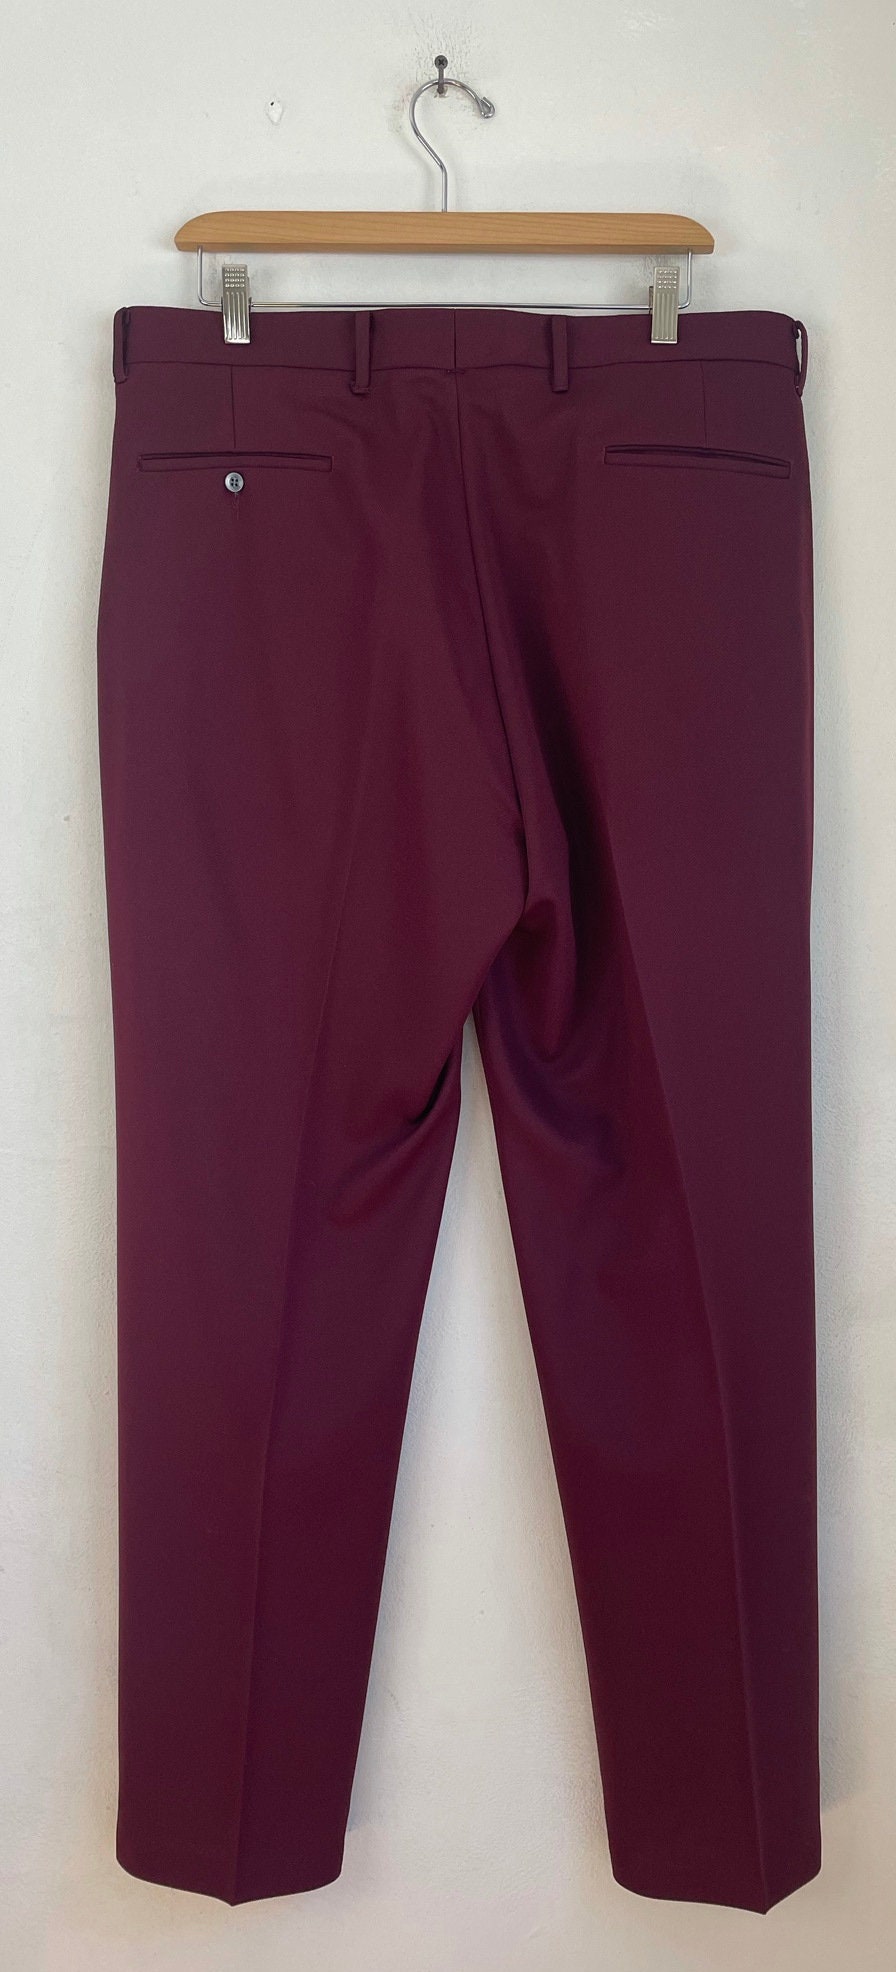 Vintage Dark Red Dress Pants Size 36 Waist 1980s Haband - Etsy